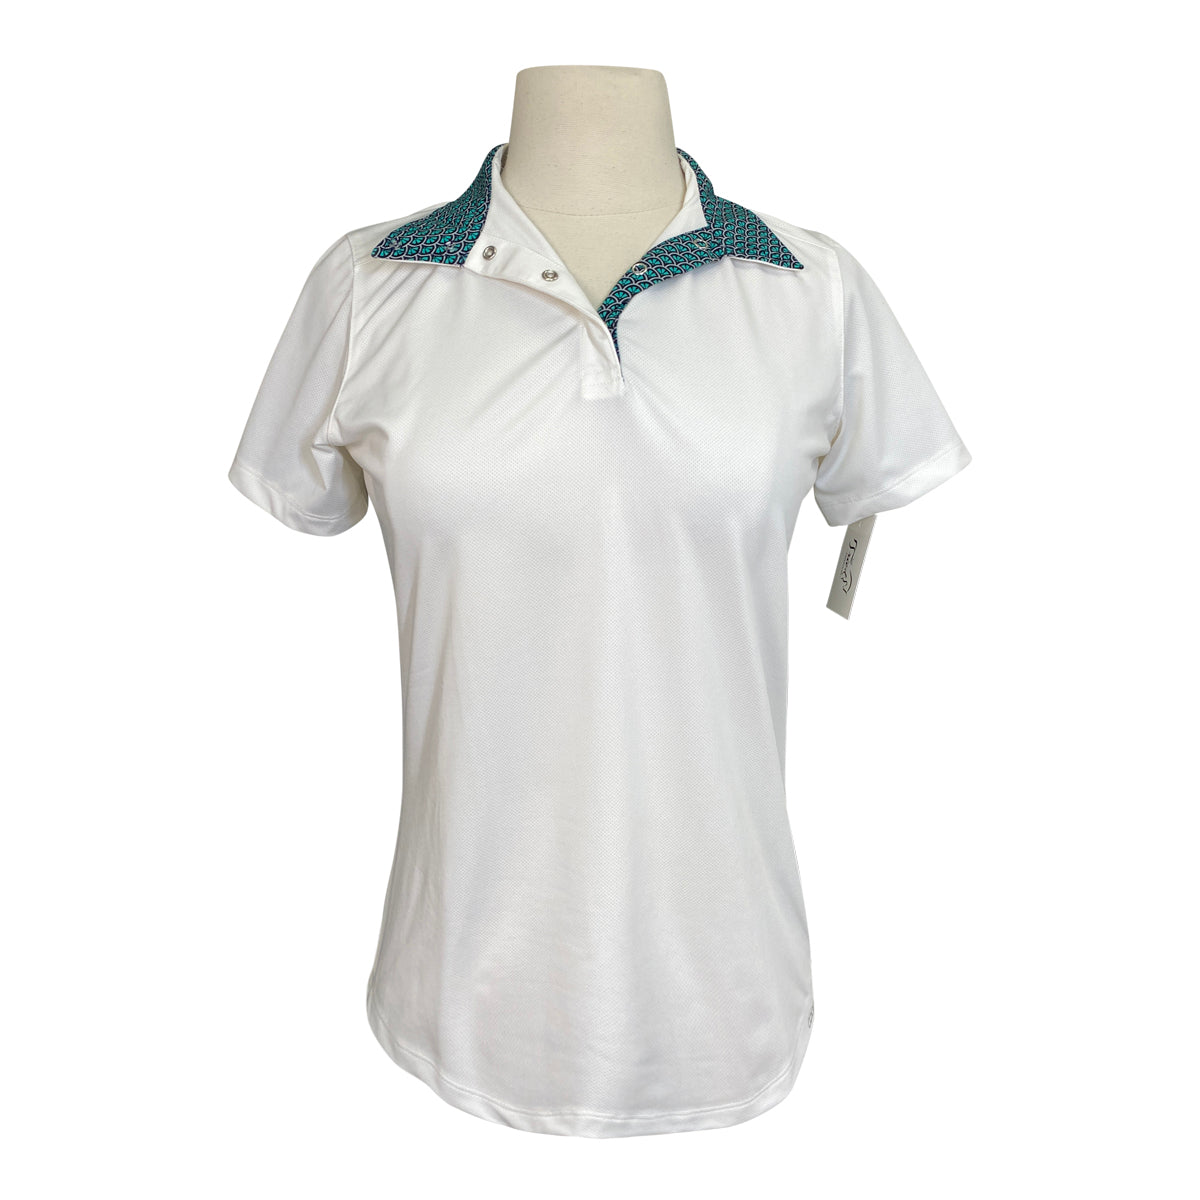 Dover Saddlery CoolBlast 100 'Showtime' Short Sleeve Show Shirt in White w/Blue Shells